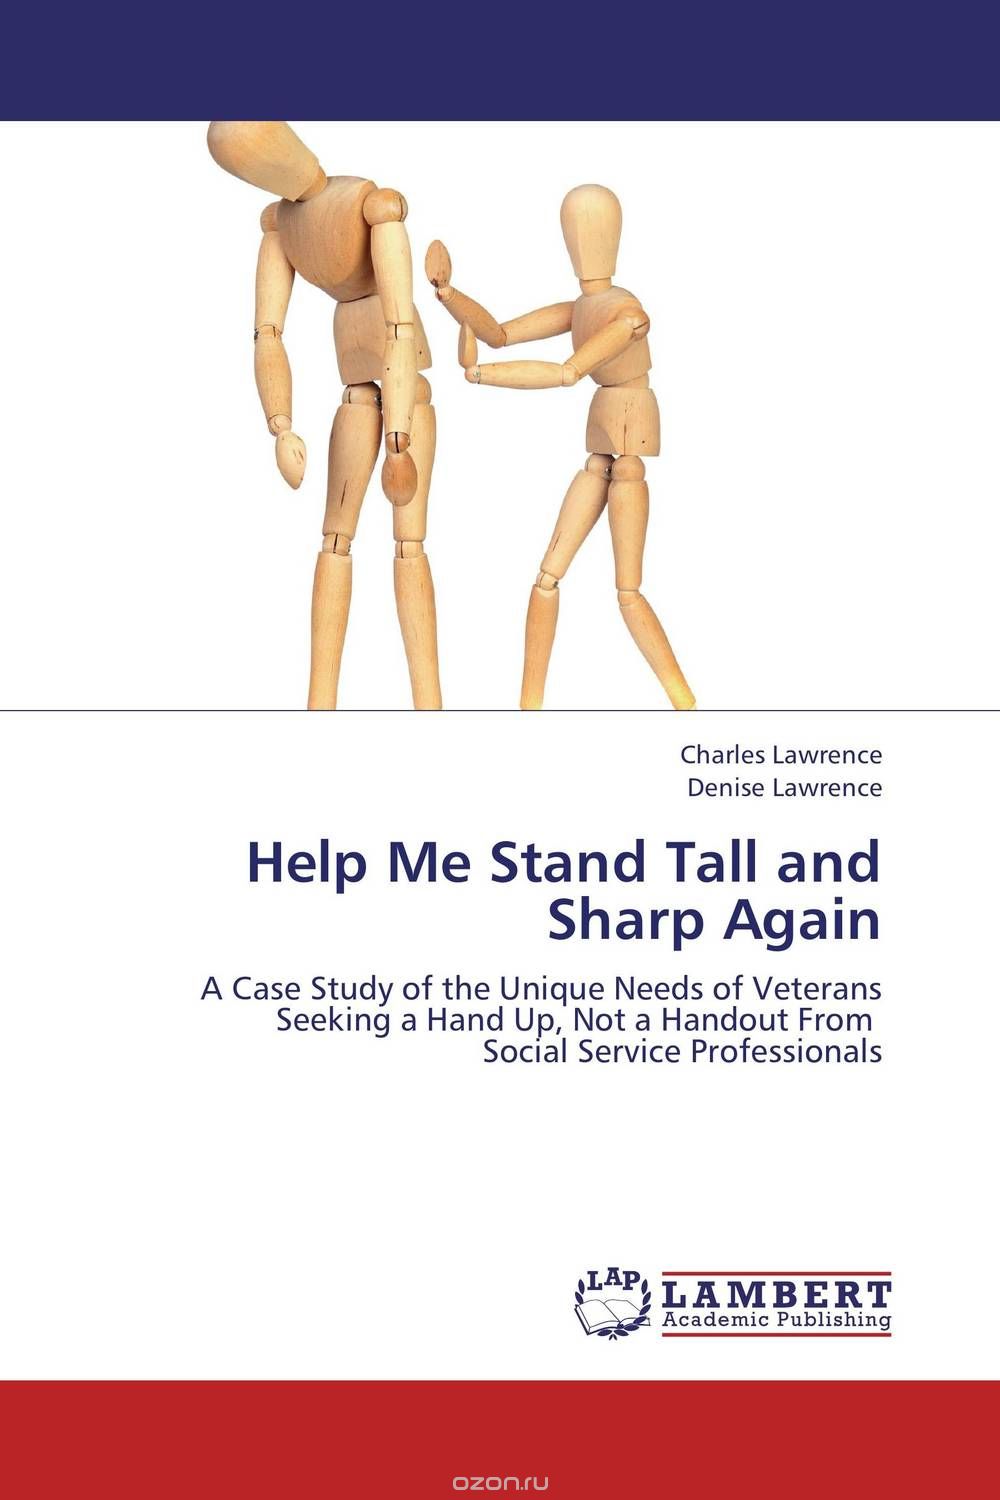 Скачать книгу "Help Me Stand Tall and Sharp Again"